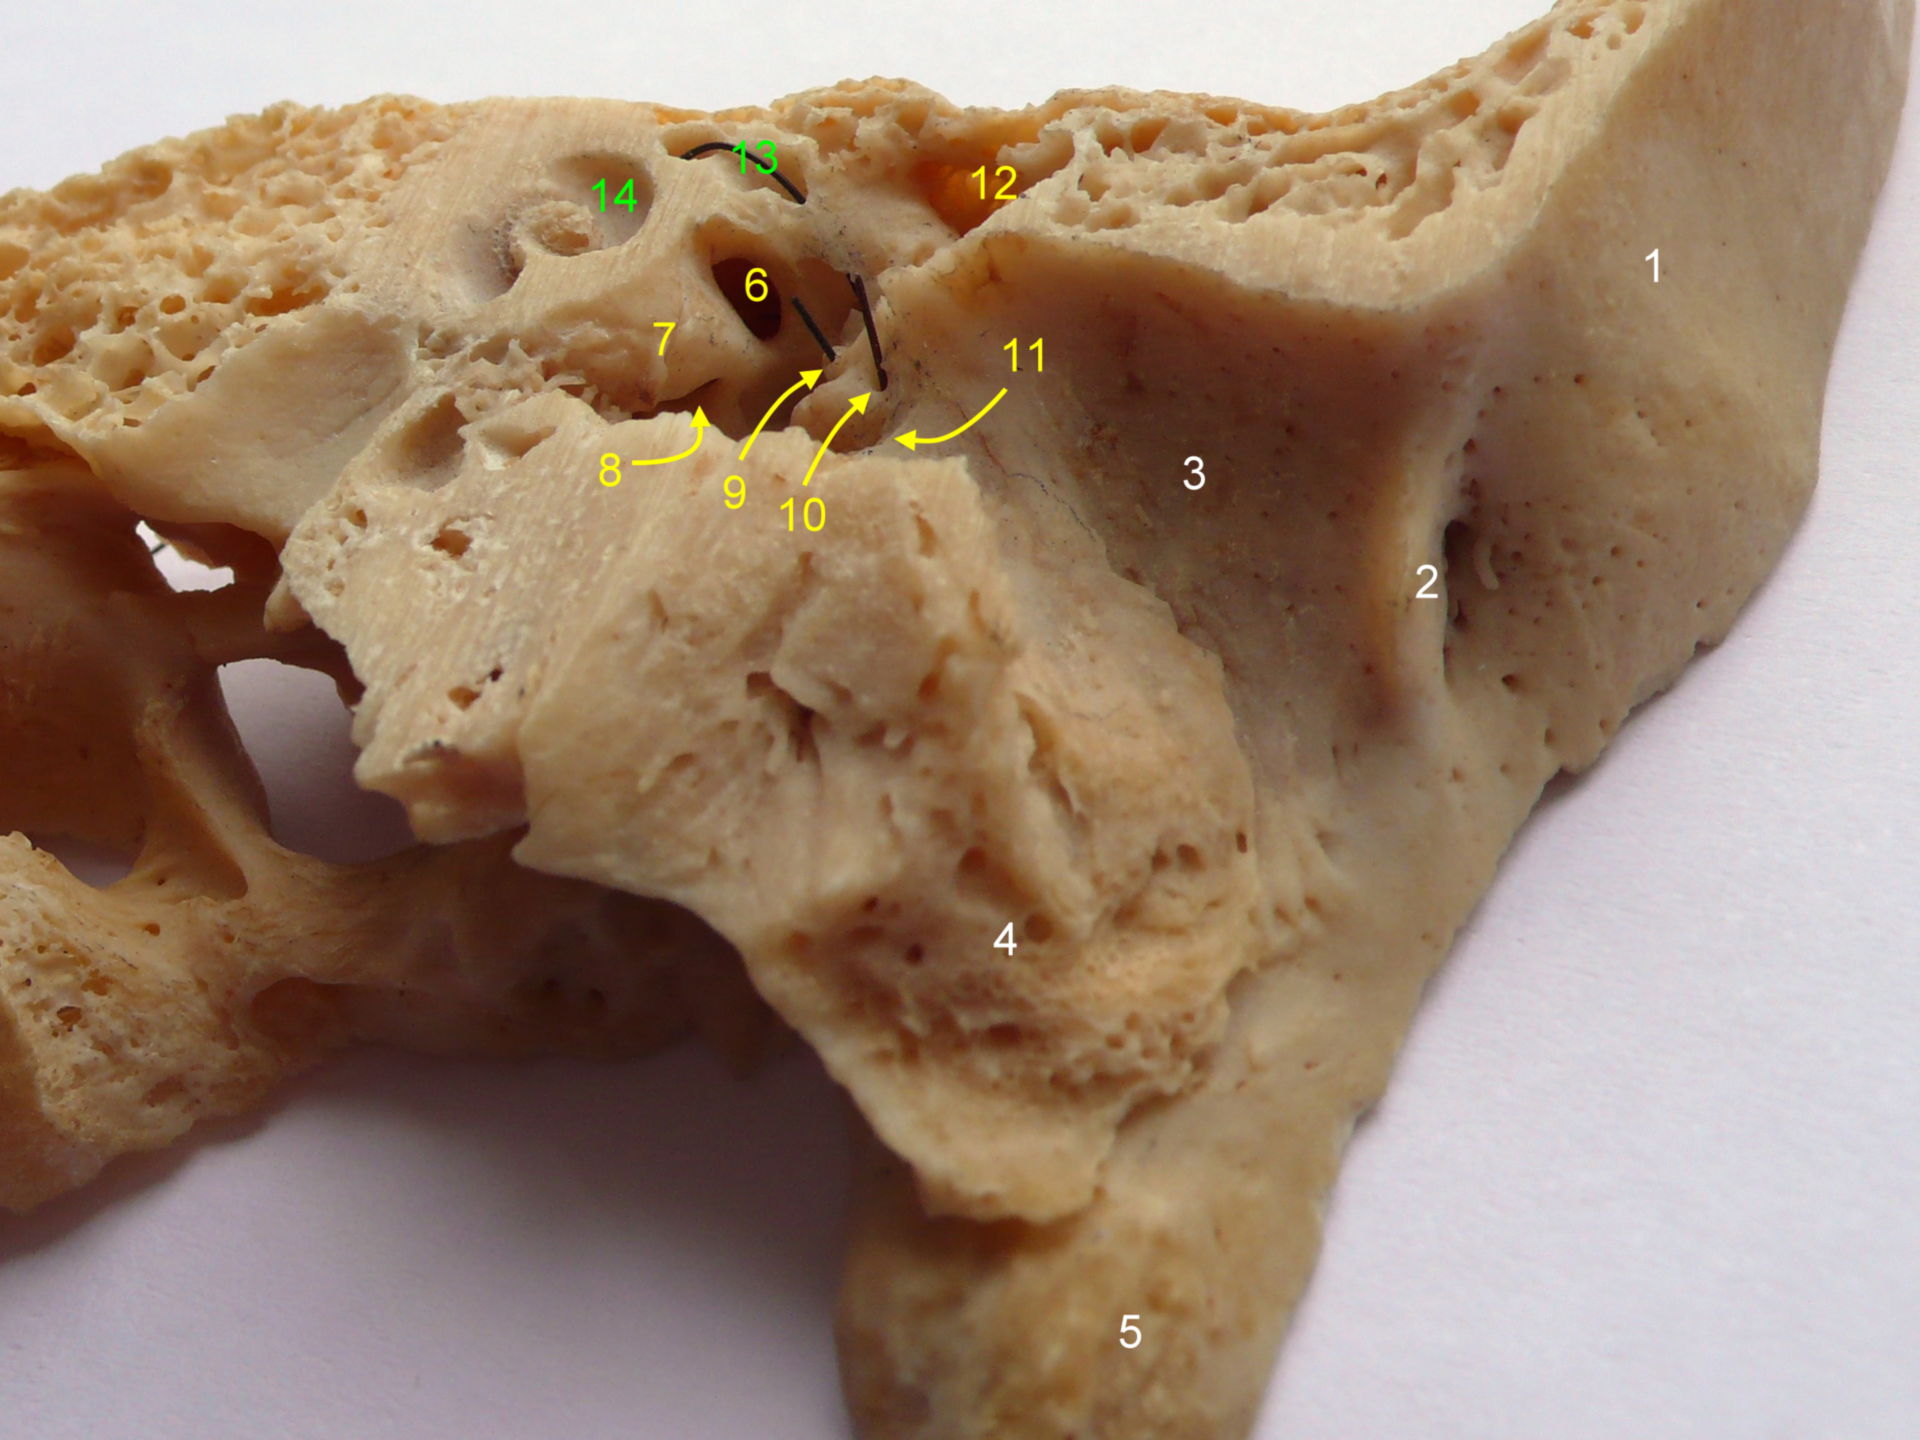 Section through the temporal bone